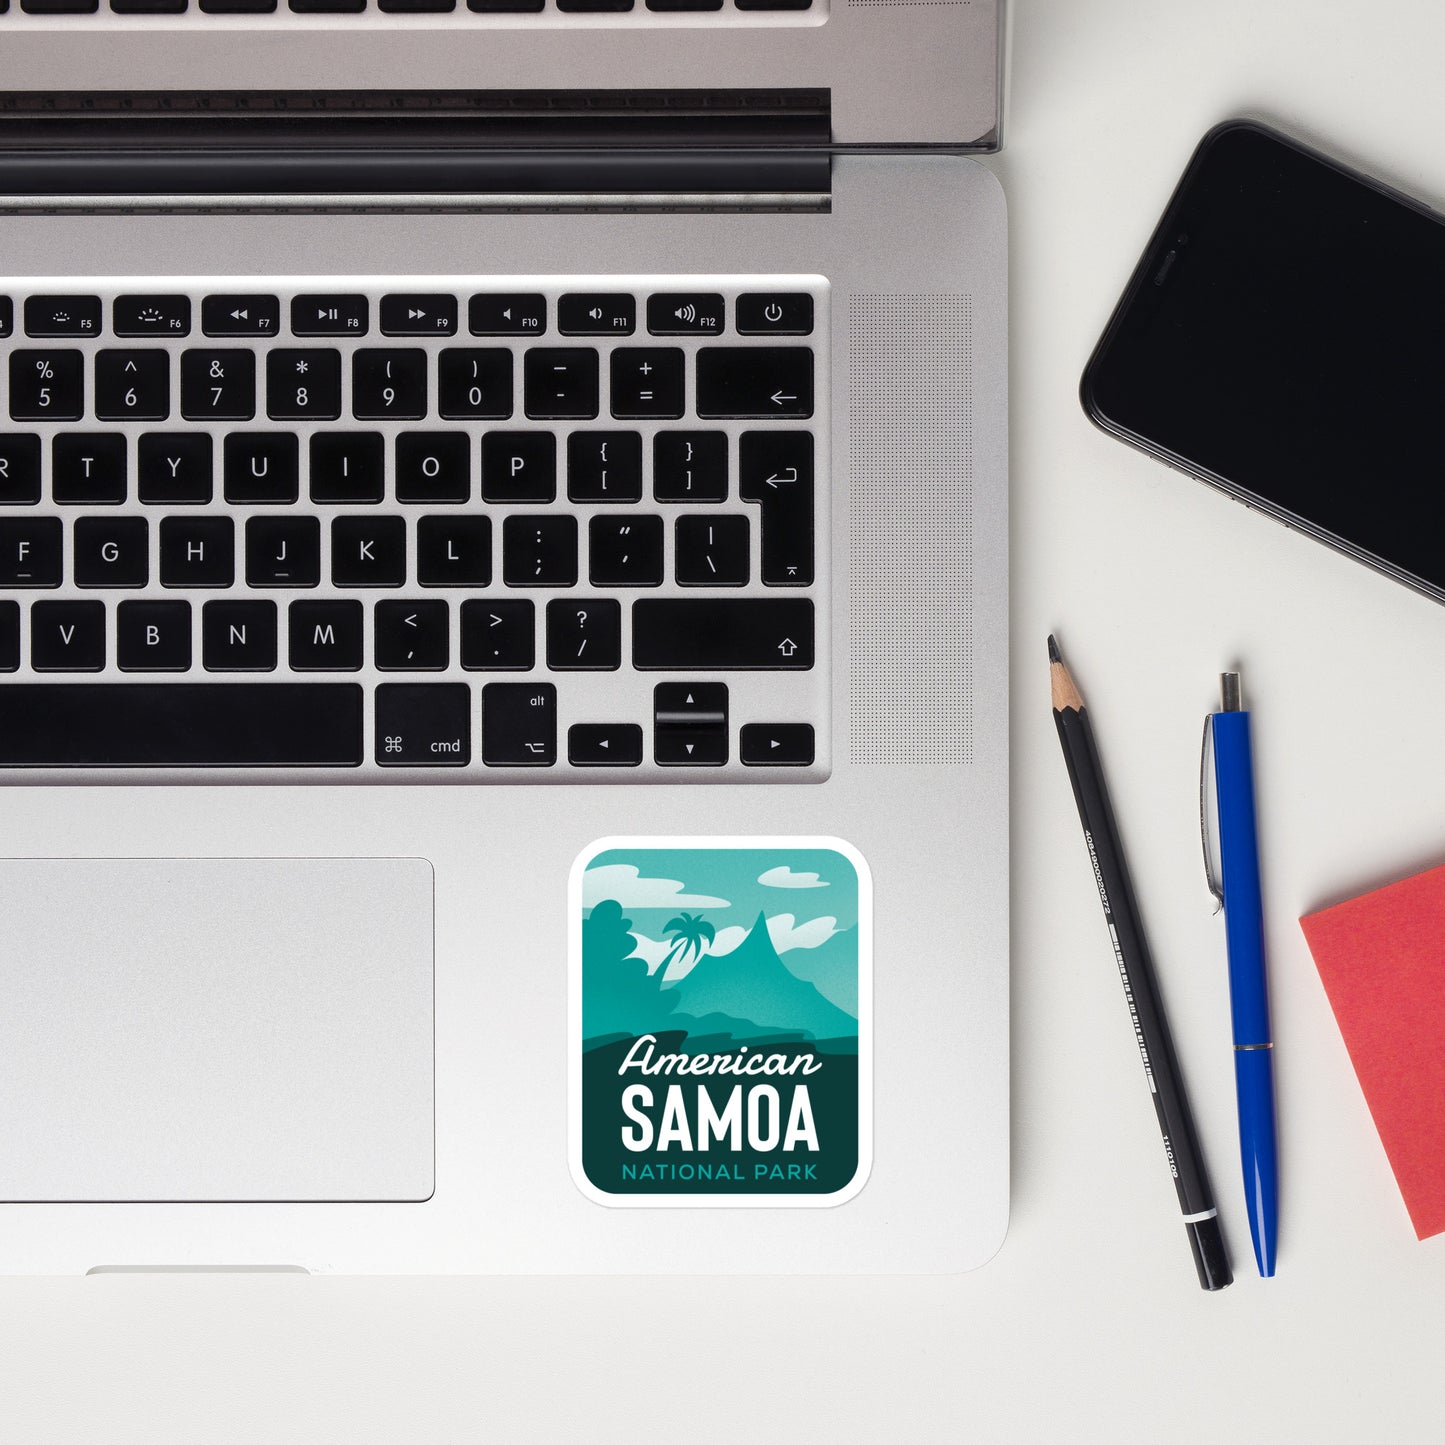 A sticker of American Samoa National Park on a laptop